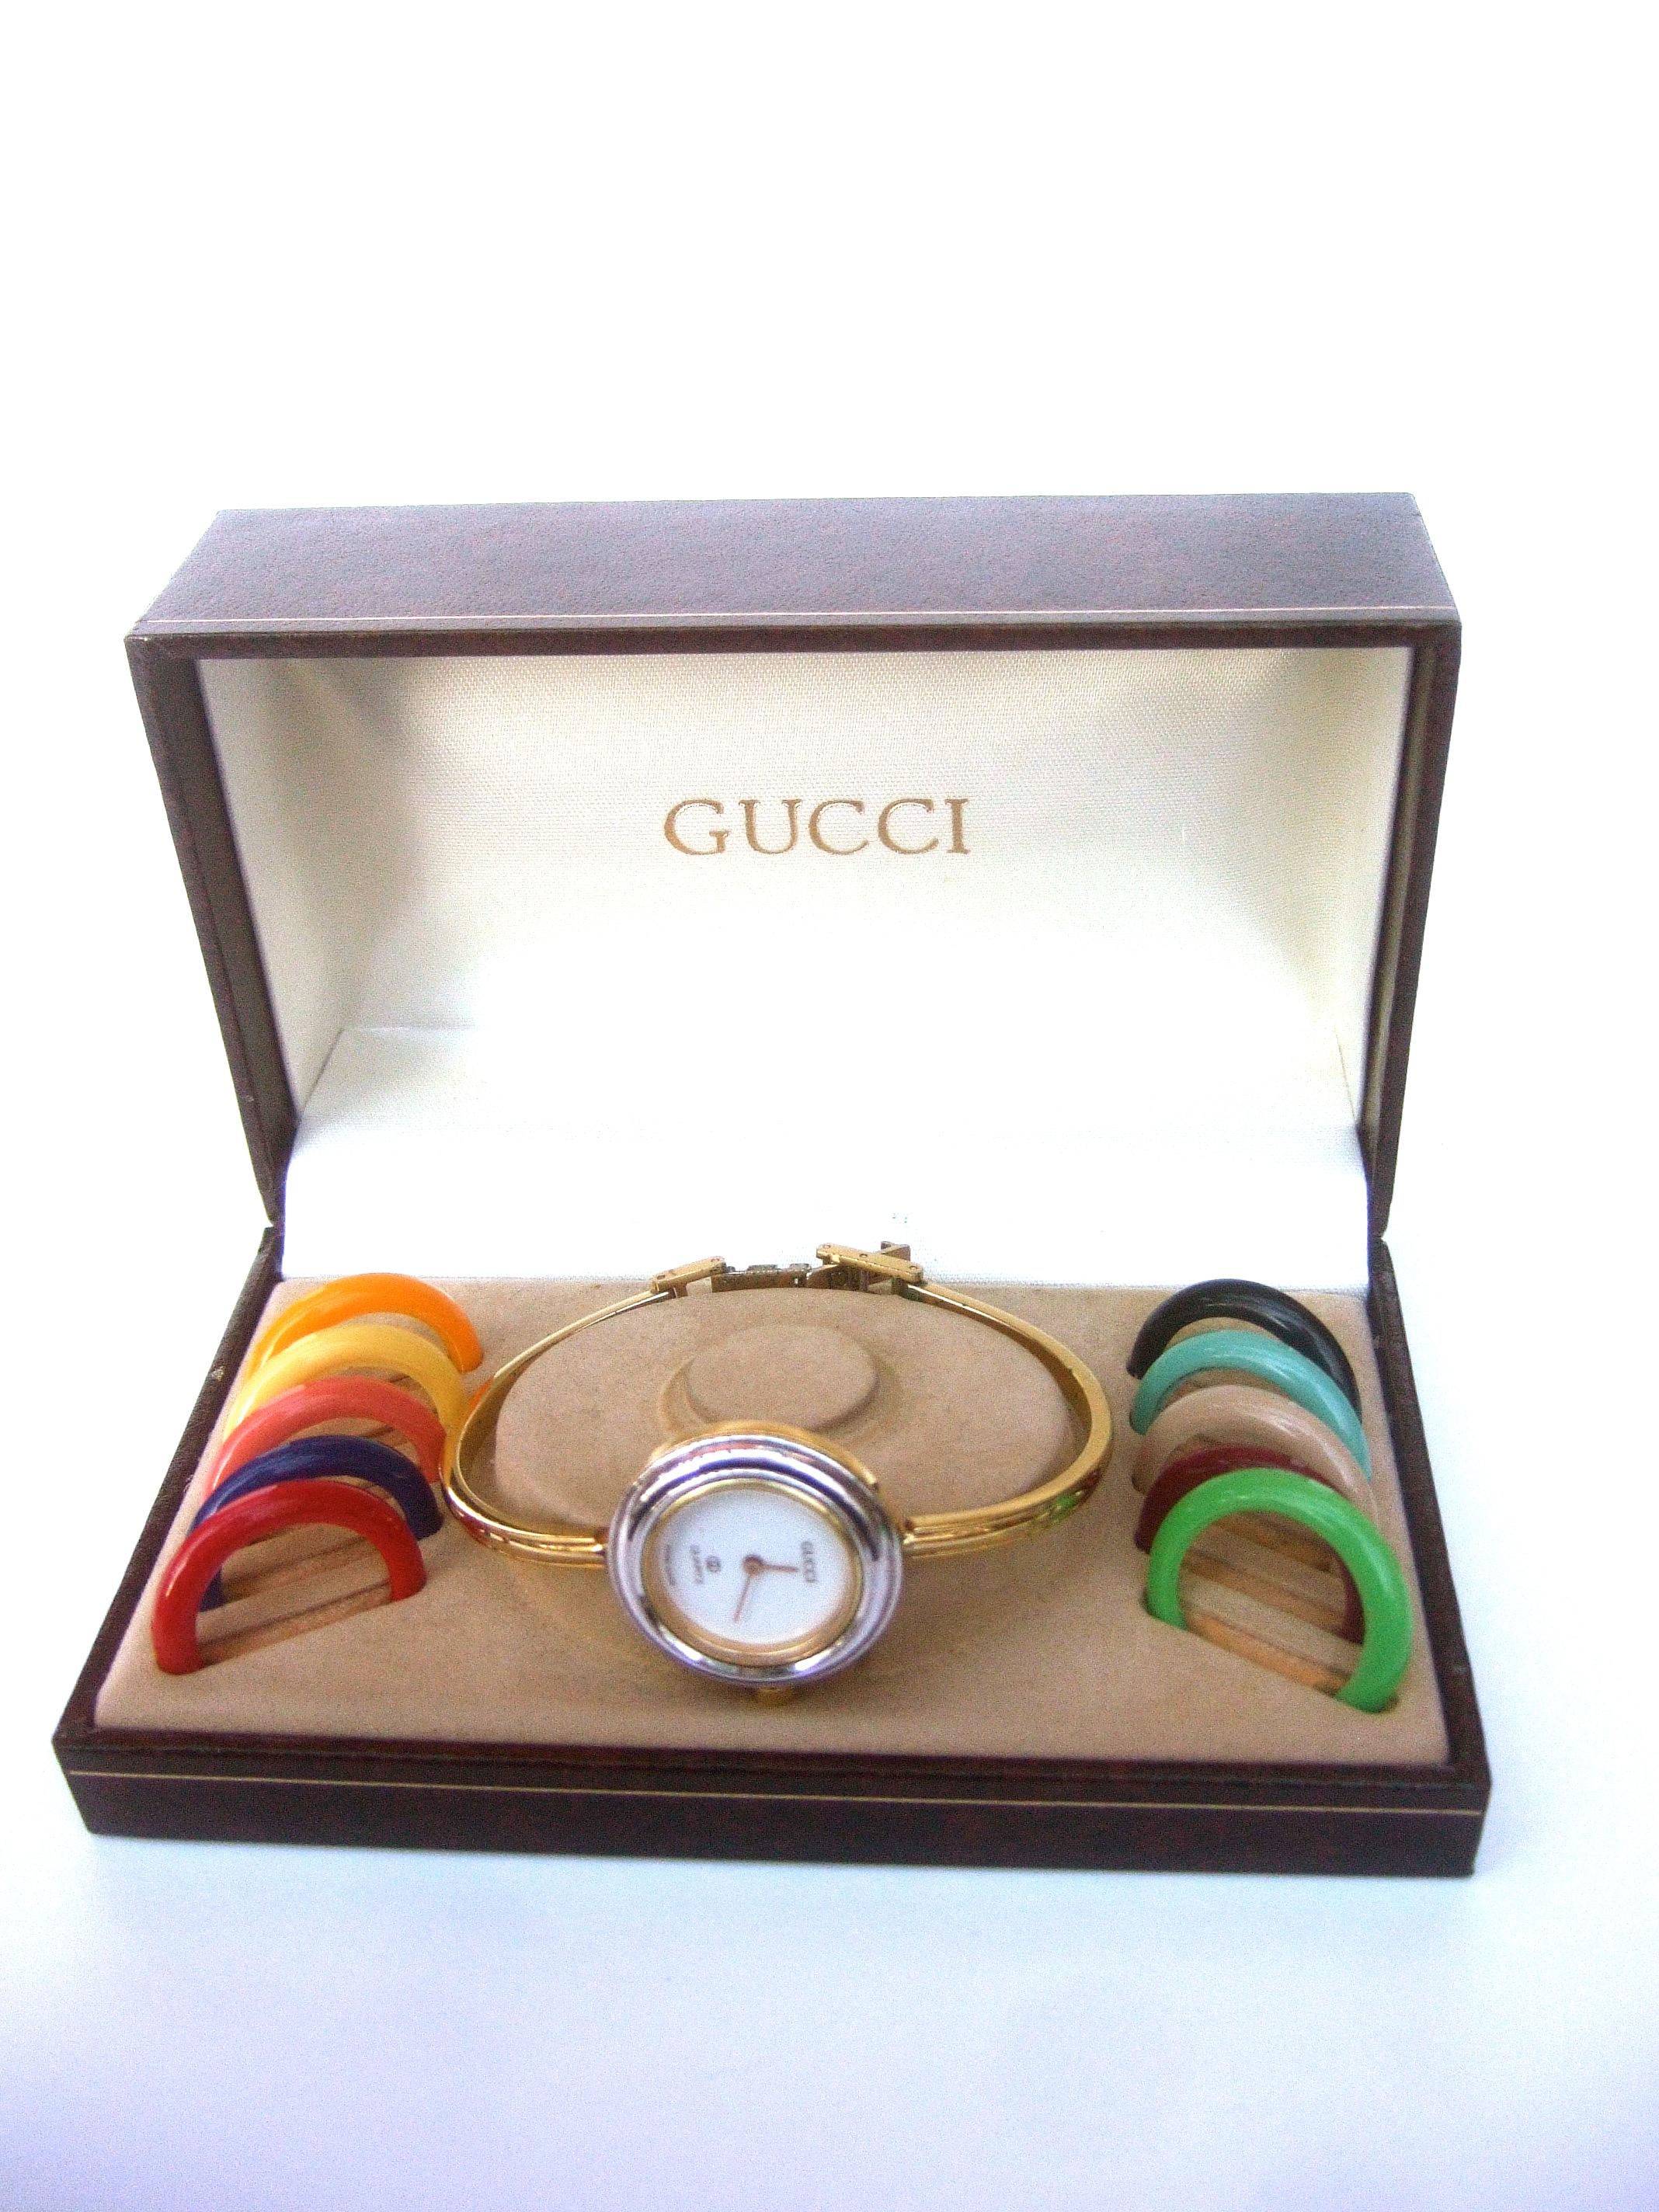 Gucci Womens Wrist Watch in Original Gucci Presentation Box c 1980s 9